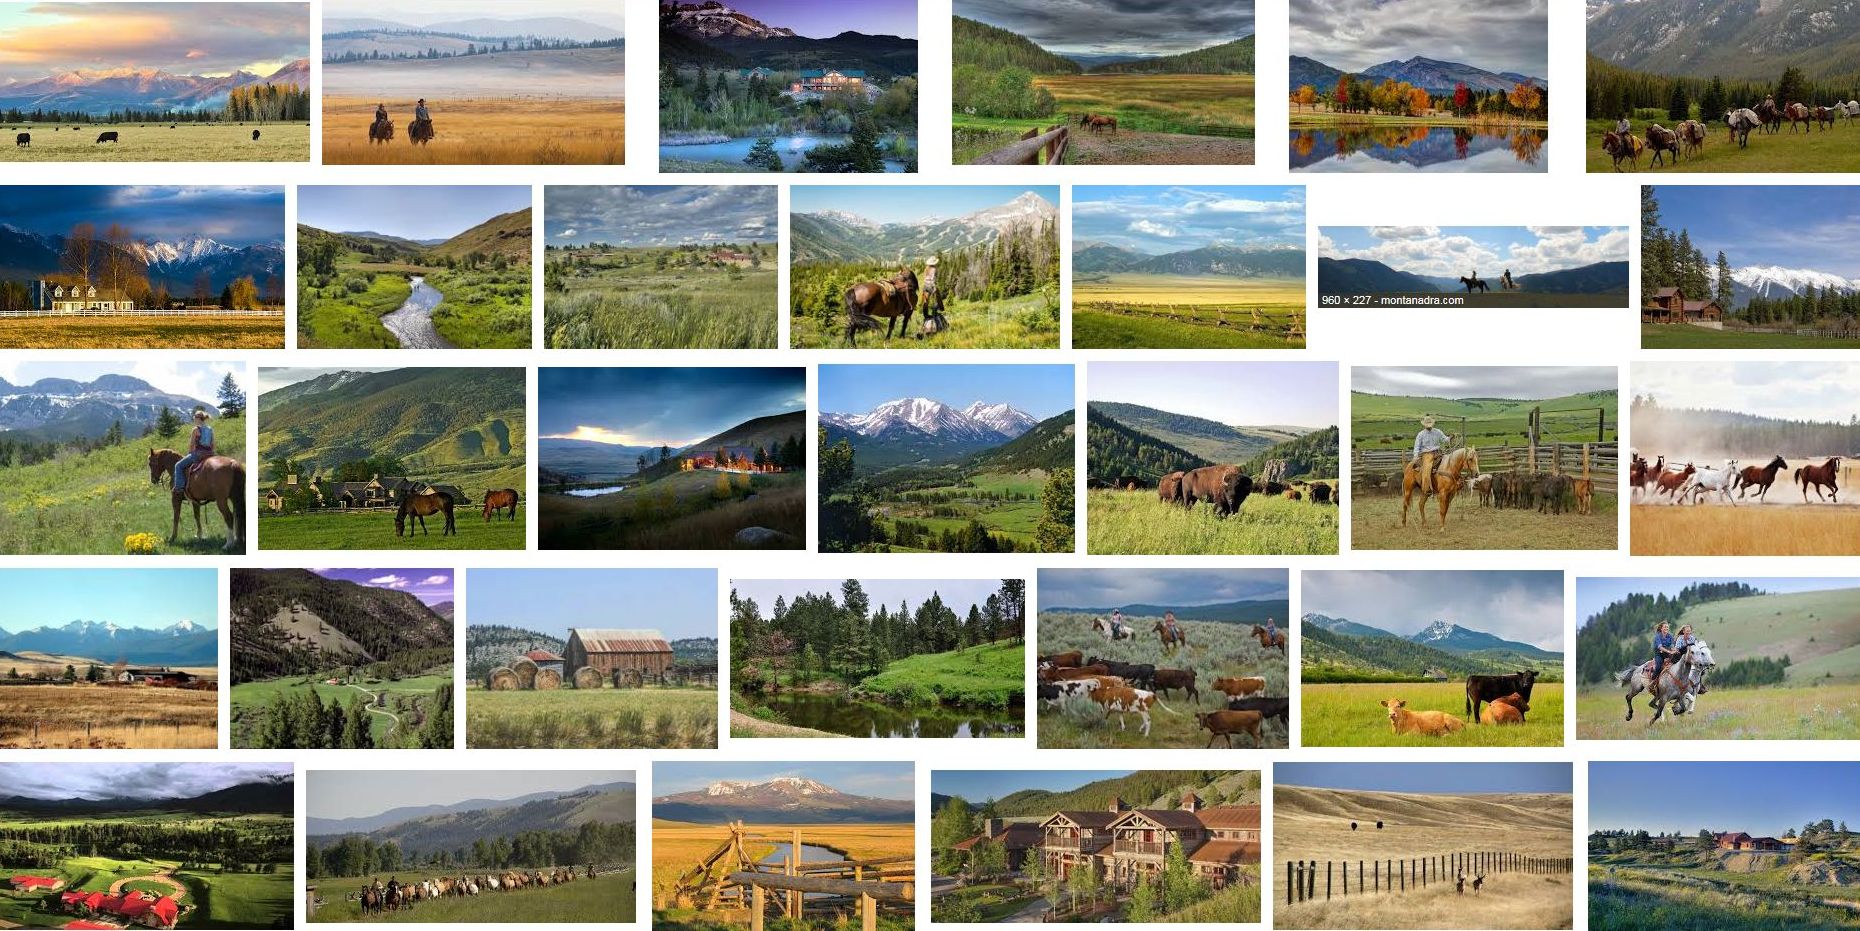 Montana Ranch Listings $800,000 To $900,000